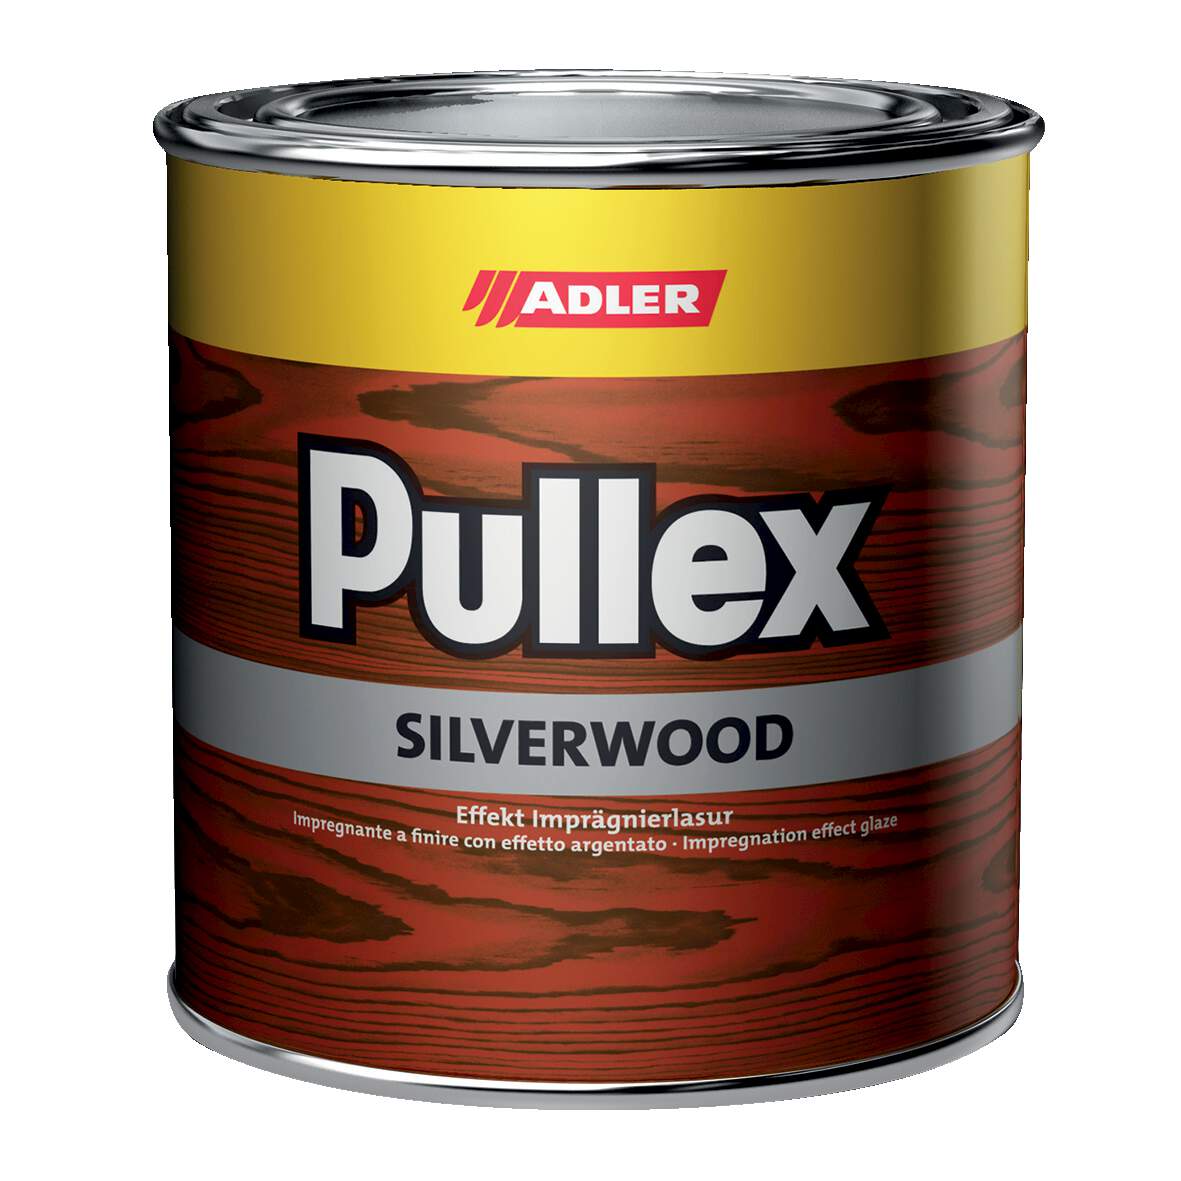 1197810 - Pullex-Silverwood